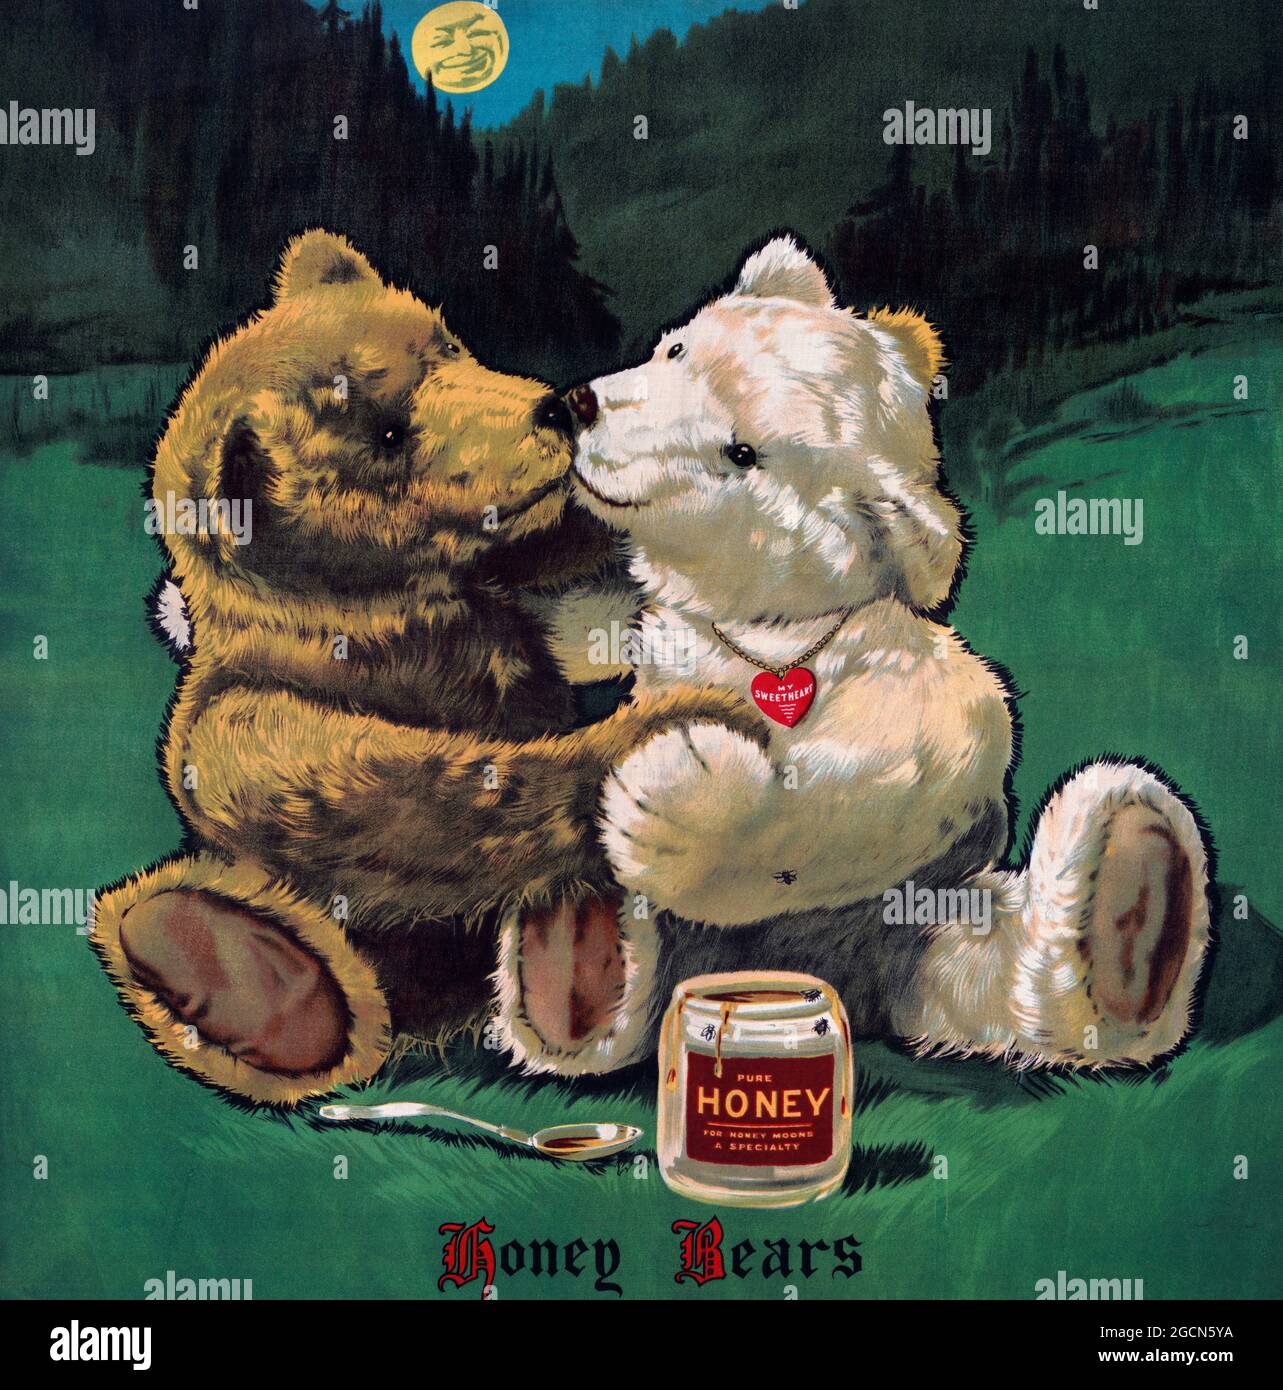 Honey bears - Two loving bears kissing with a jar of honey nearby Stock Photo